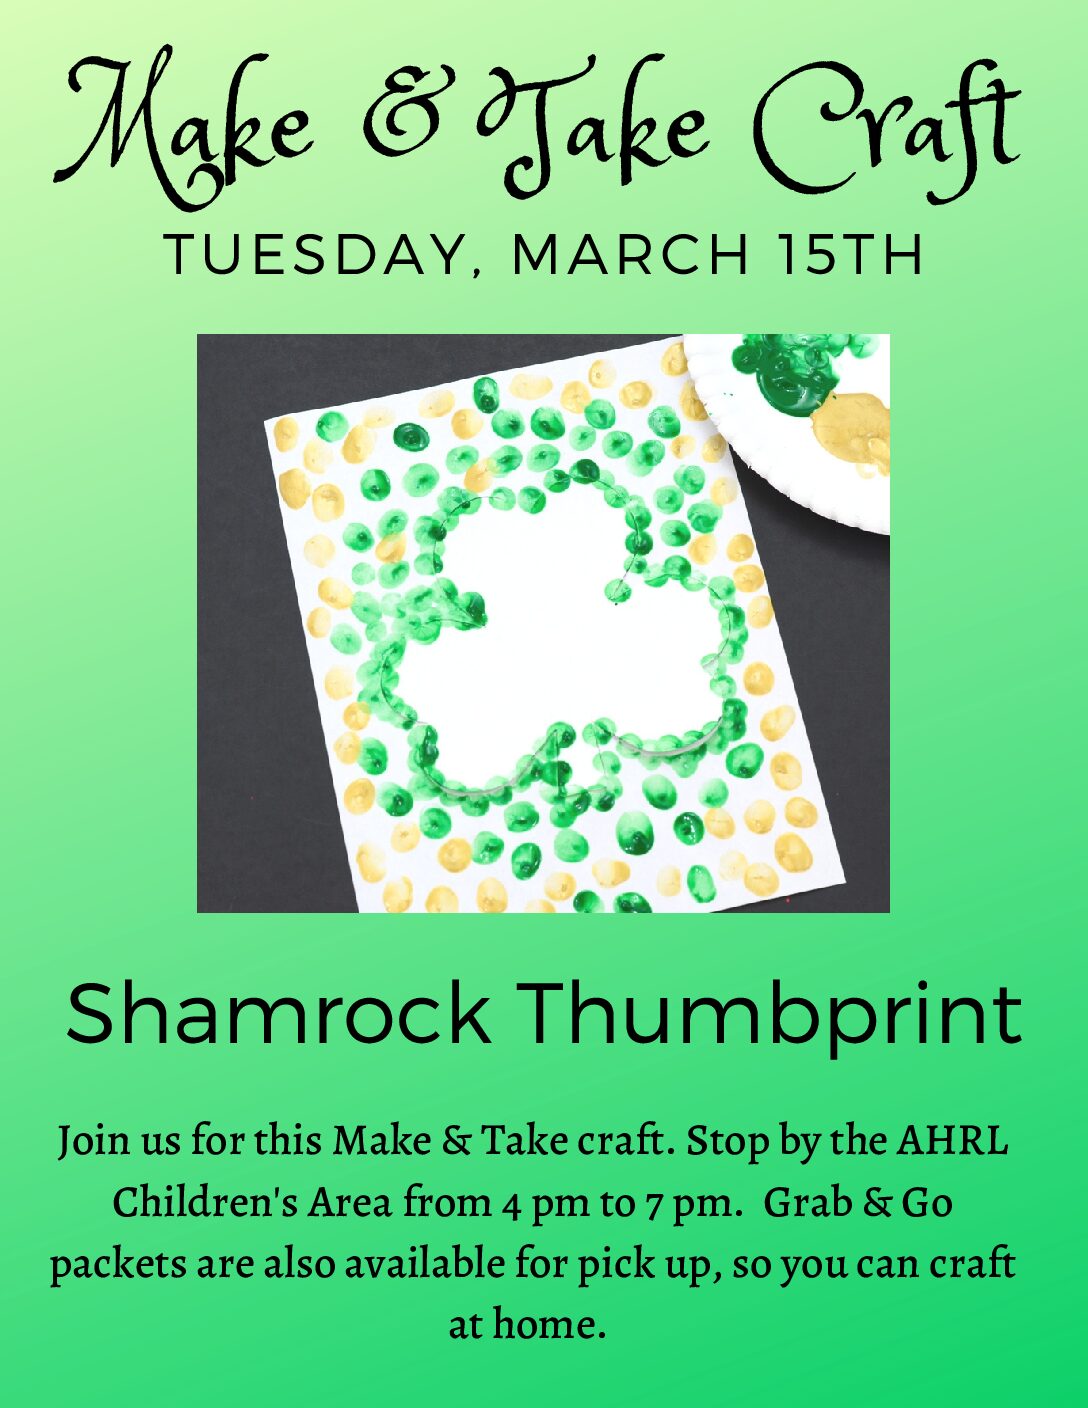 Make & Take--Tuesday, March 15th